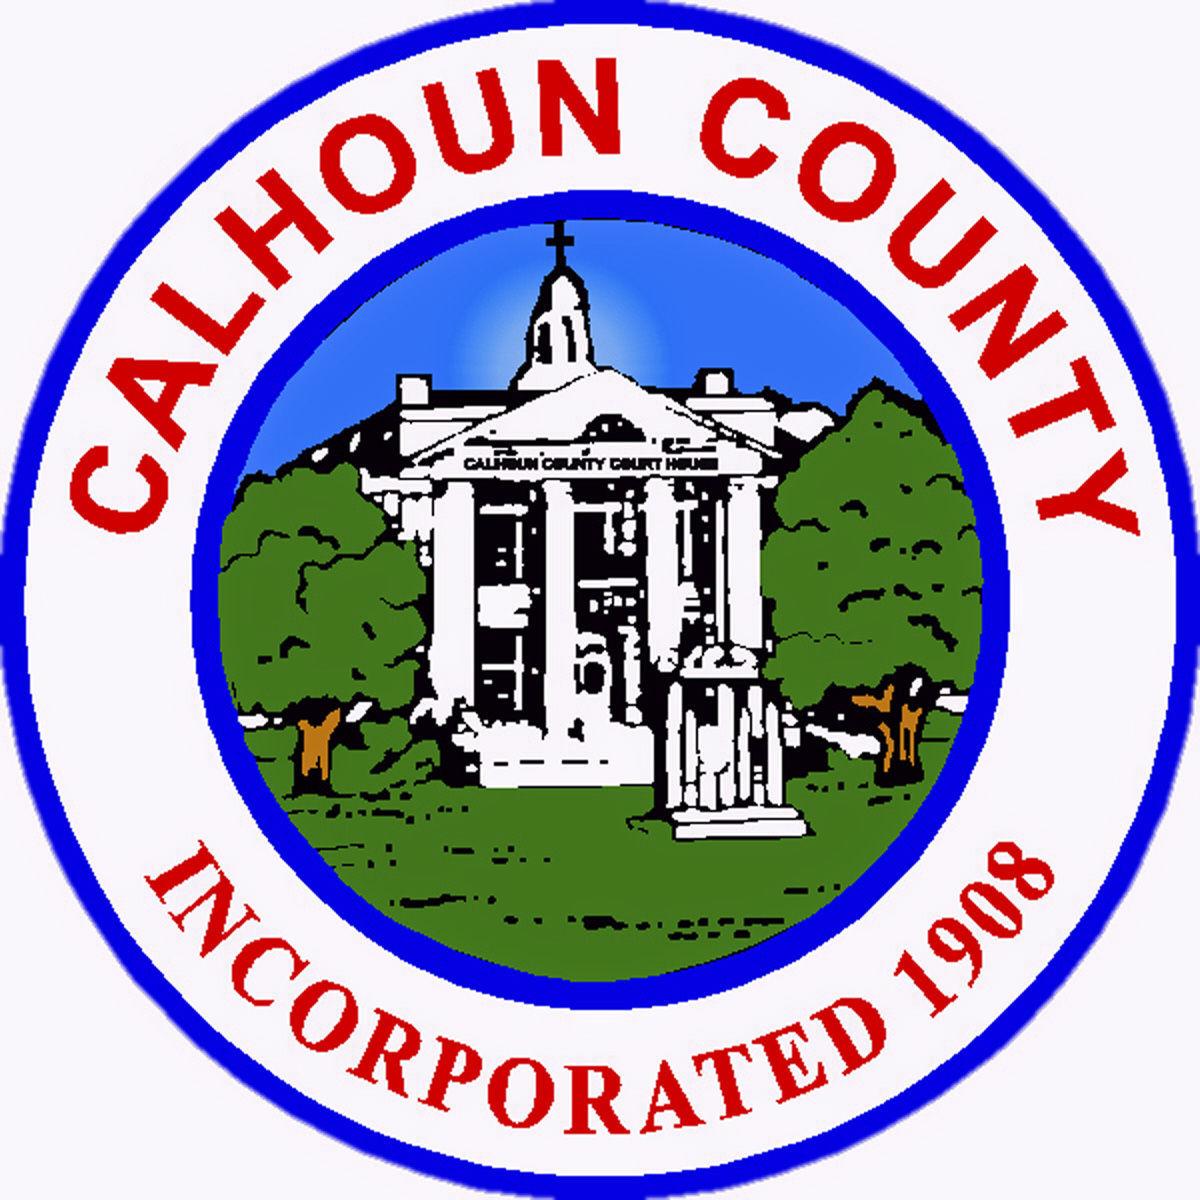 Organization logo of Calhoun County